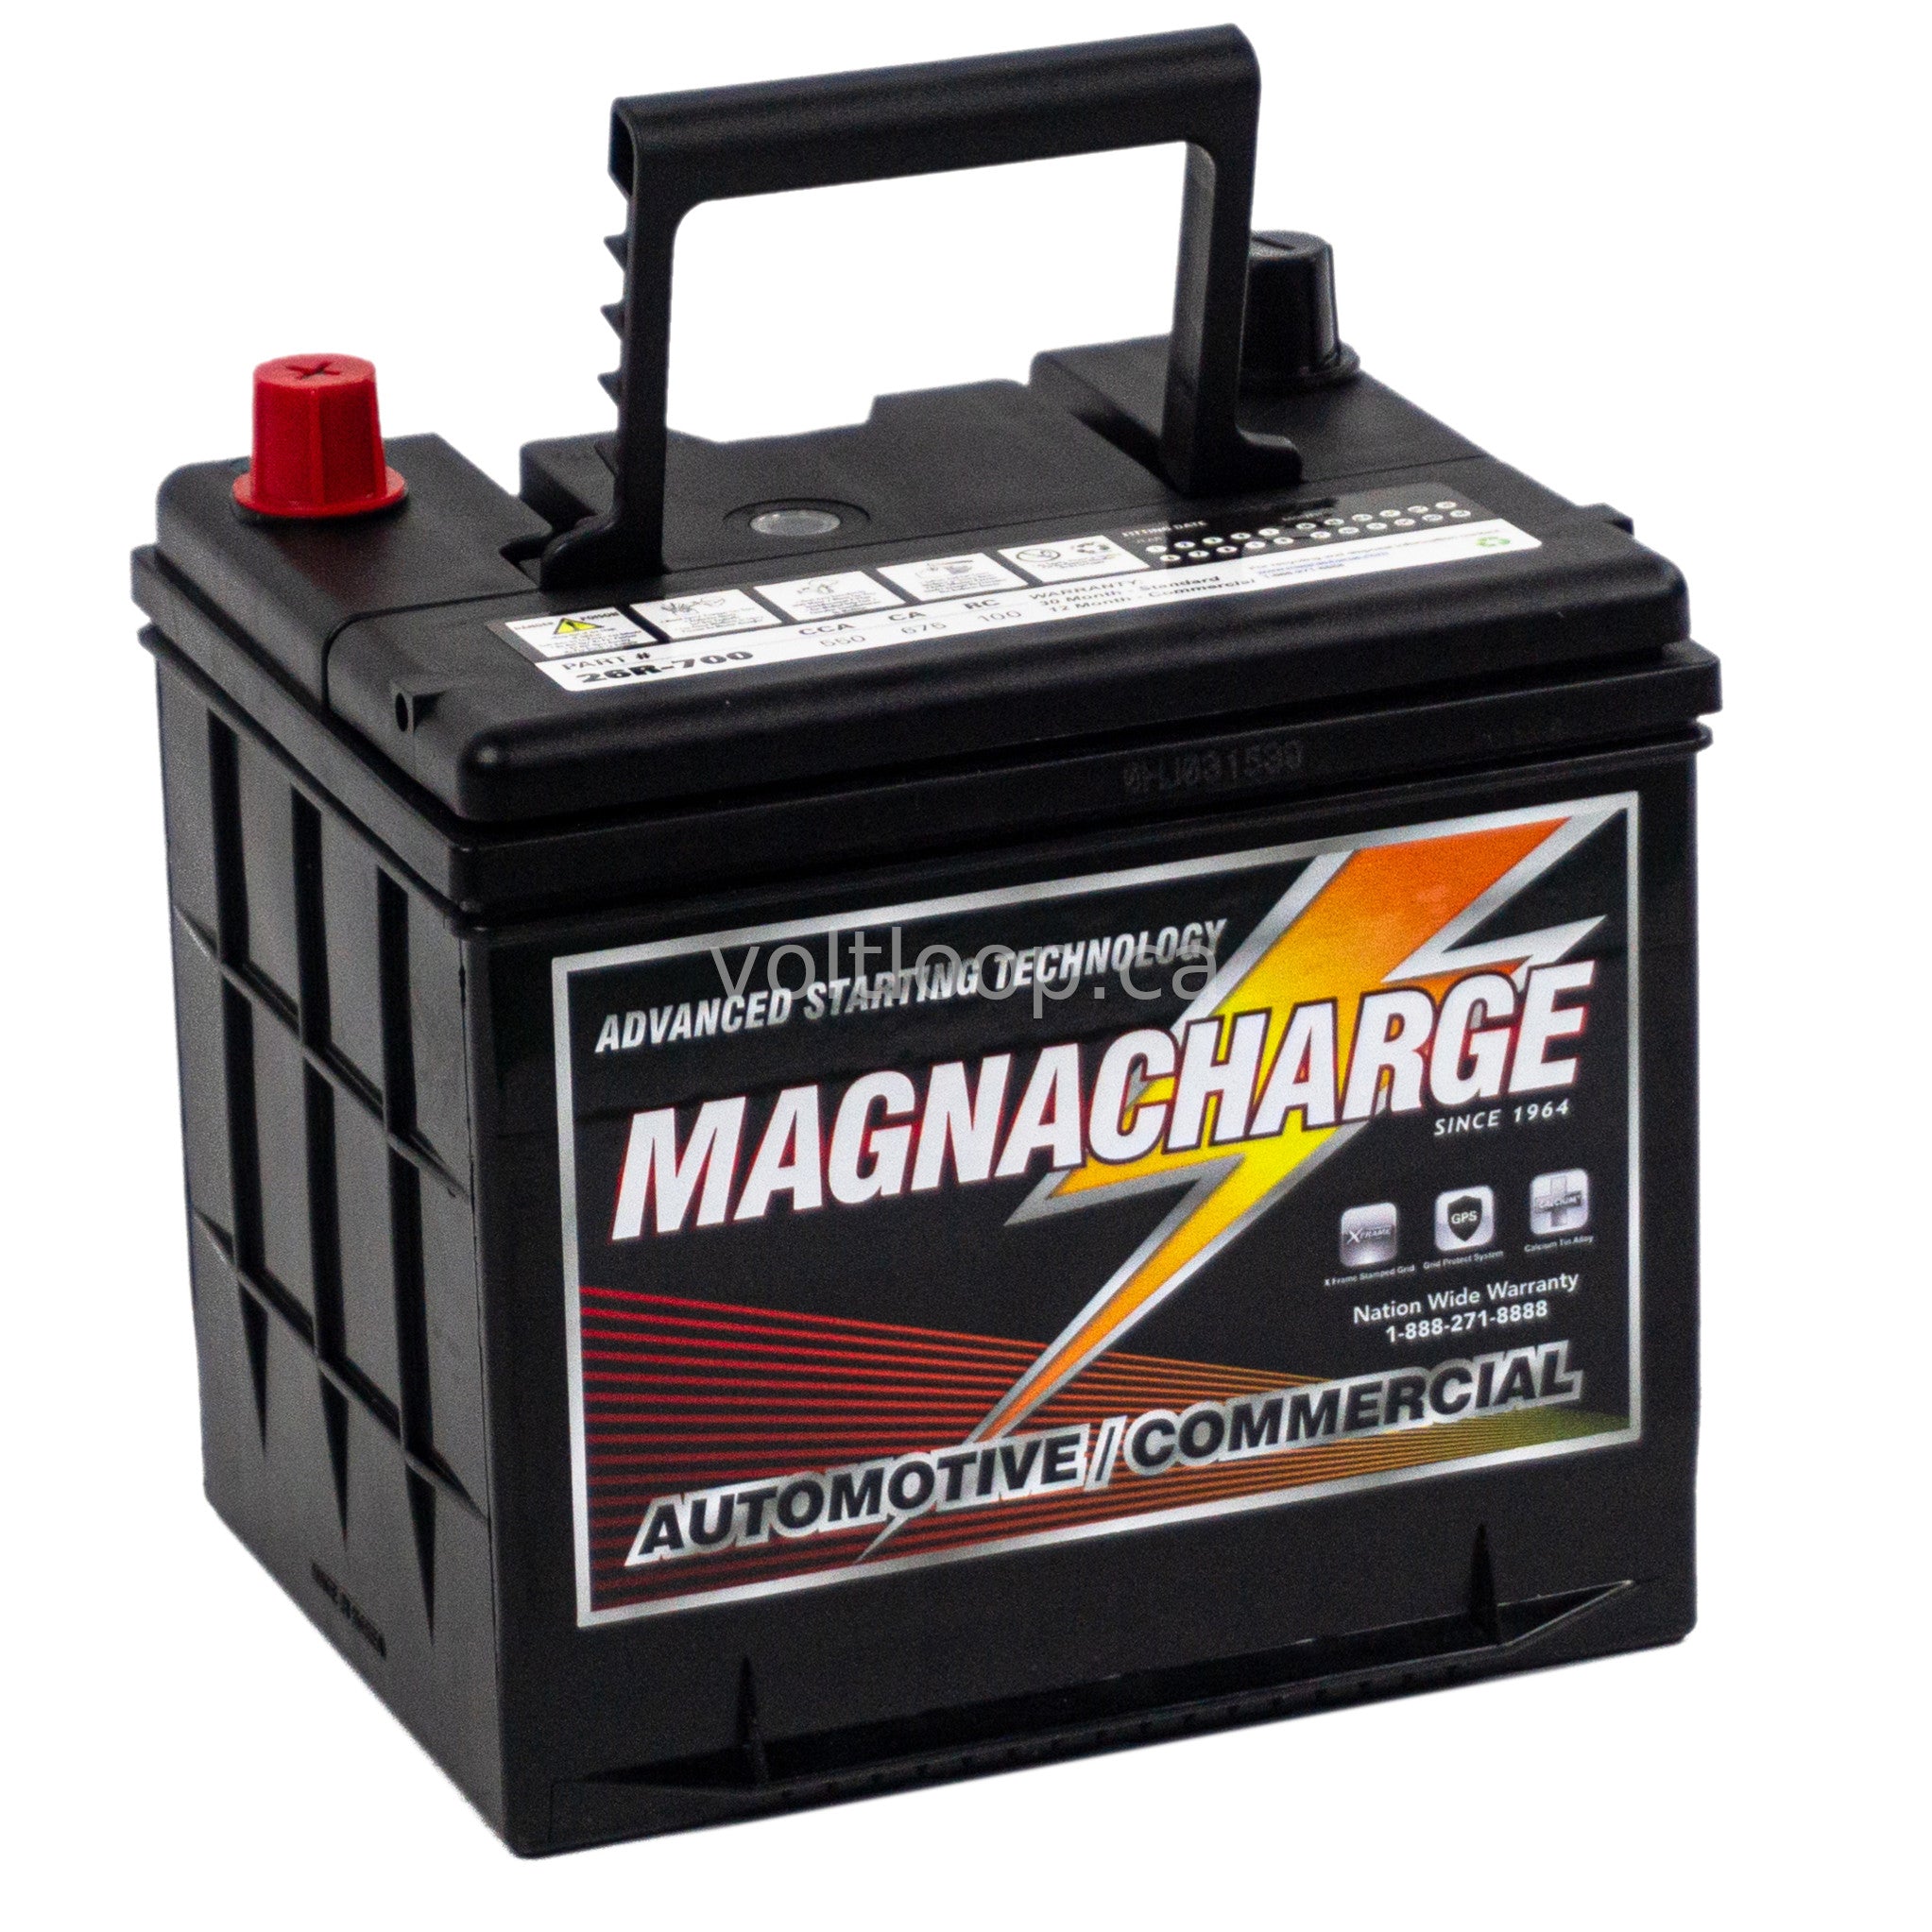 Magnacharge 26R-700 Group 26R Car Battery